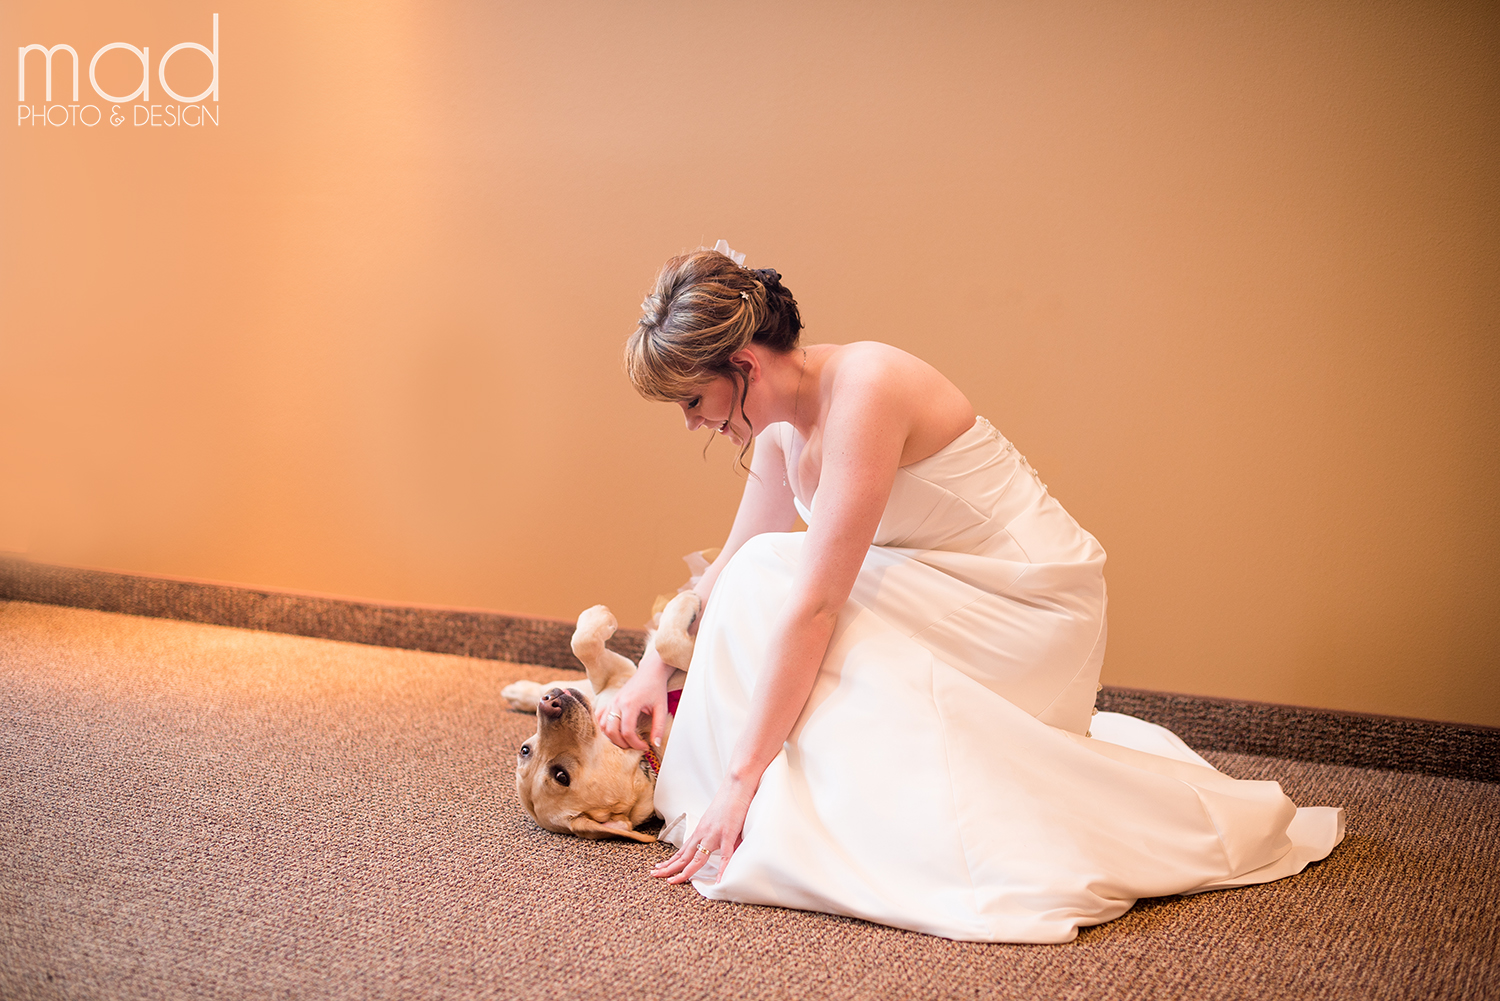 PHOTO: Wedding photographer Maddie Peschong captured tender moments between bride Valerie Parrott and her service dog, Bella, at Parrott's recent wedding.